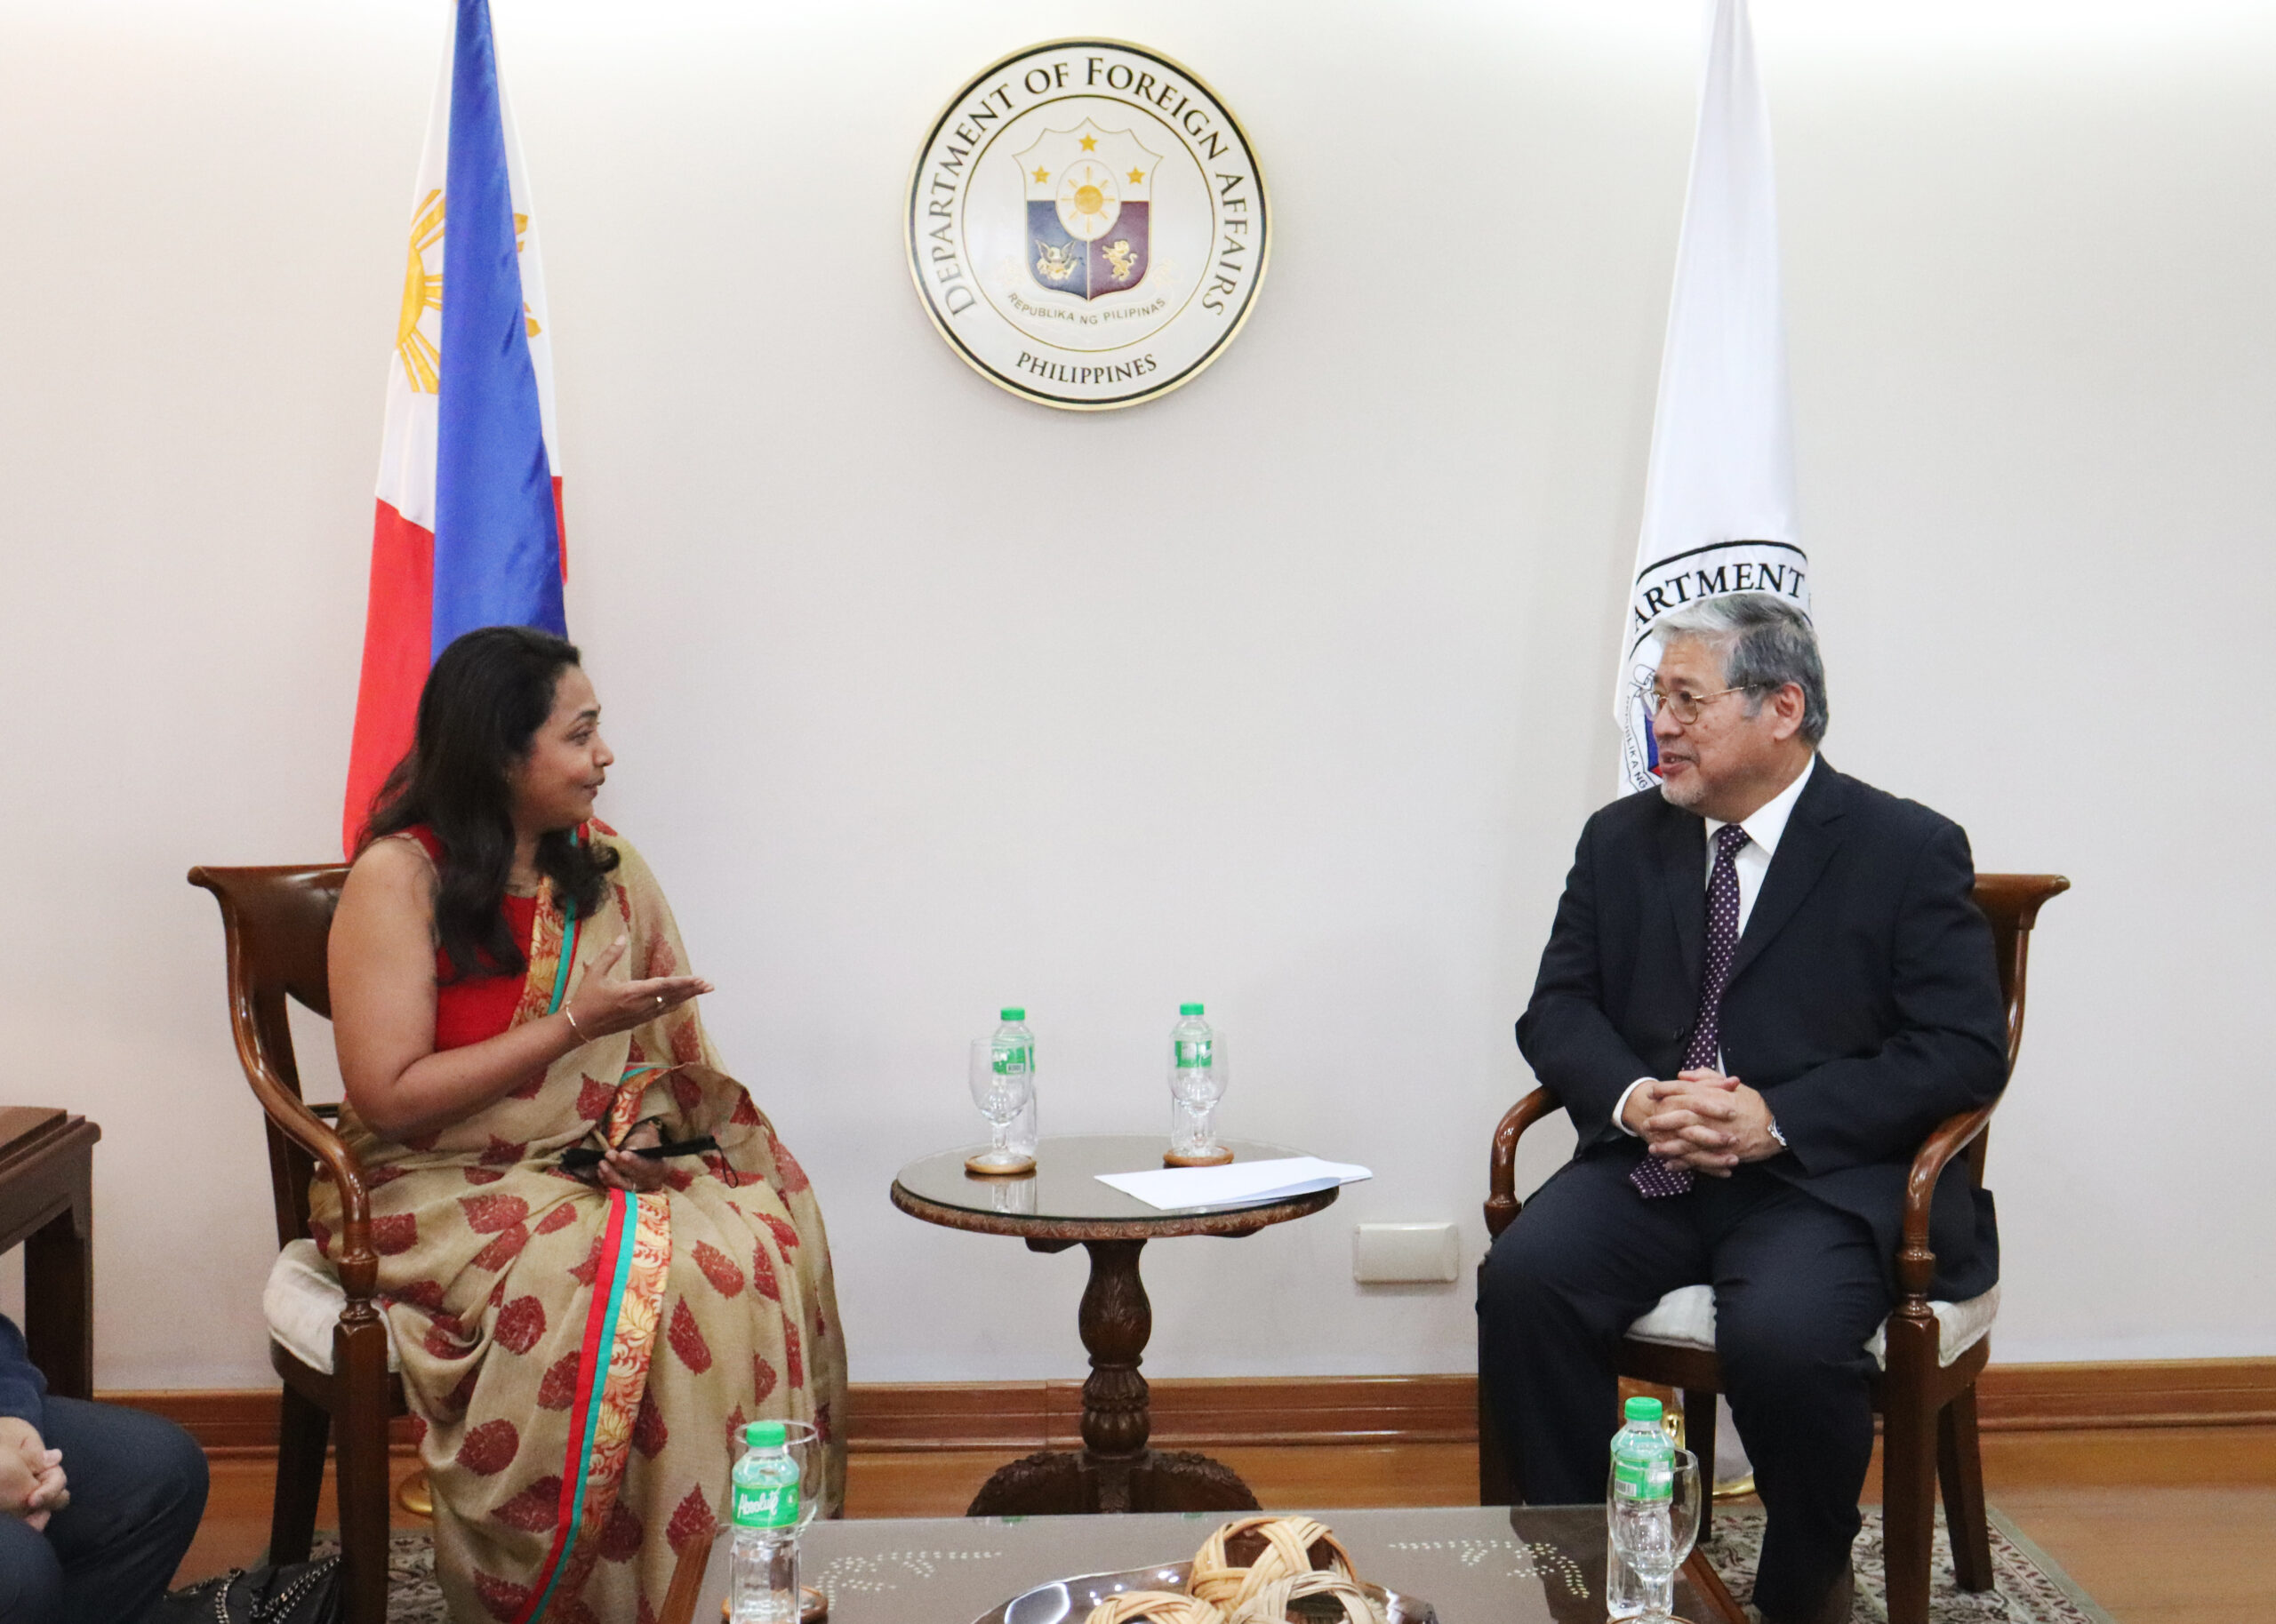 Courtesy call by Ambassador Shobini Gunasekera on the Secretary (Minister) of Foreign Affairs of the Philippines